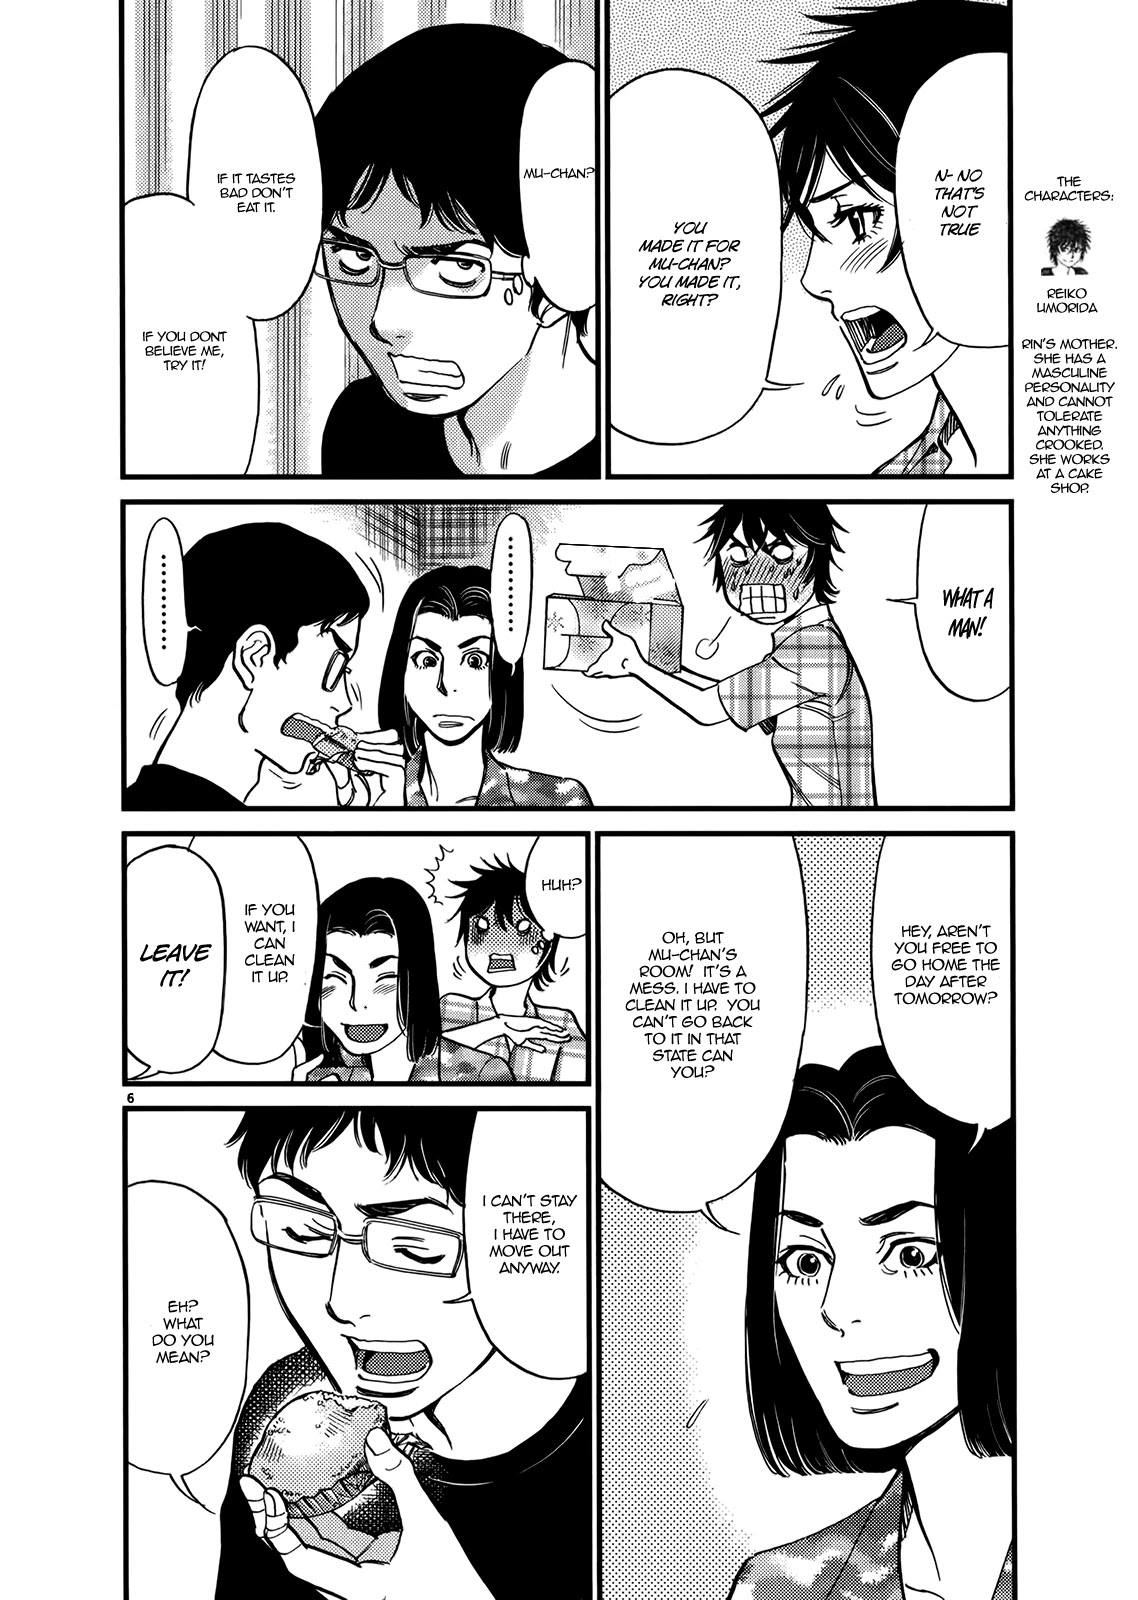 Kono S o, Mi yo! – Cupid no Itazura - Chapter 129 Page 6